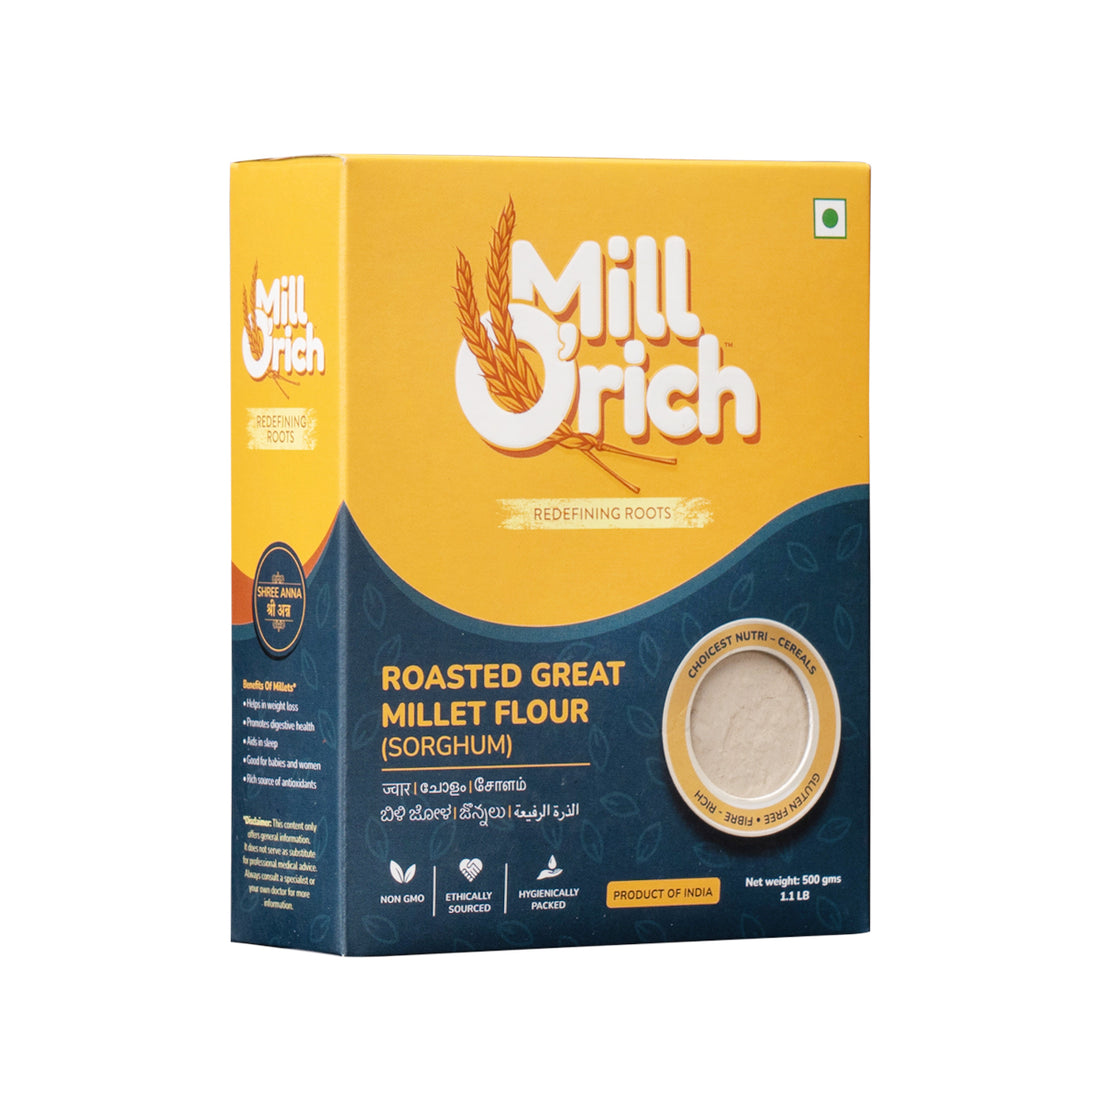 Roasted Great Millet Flour (Sorghum)